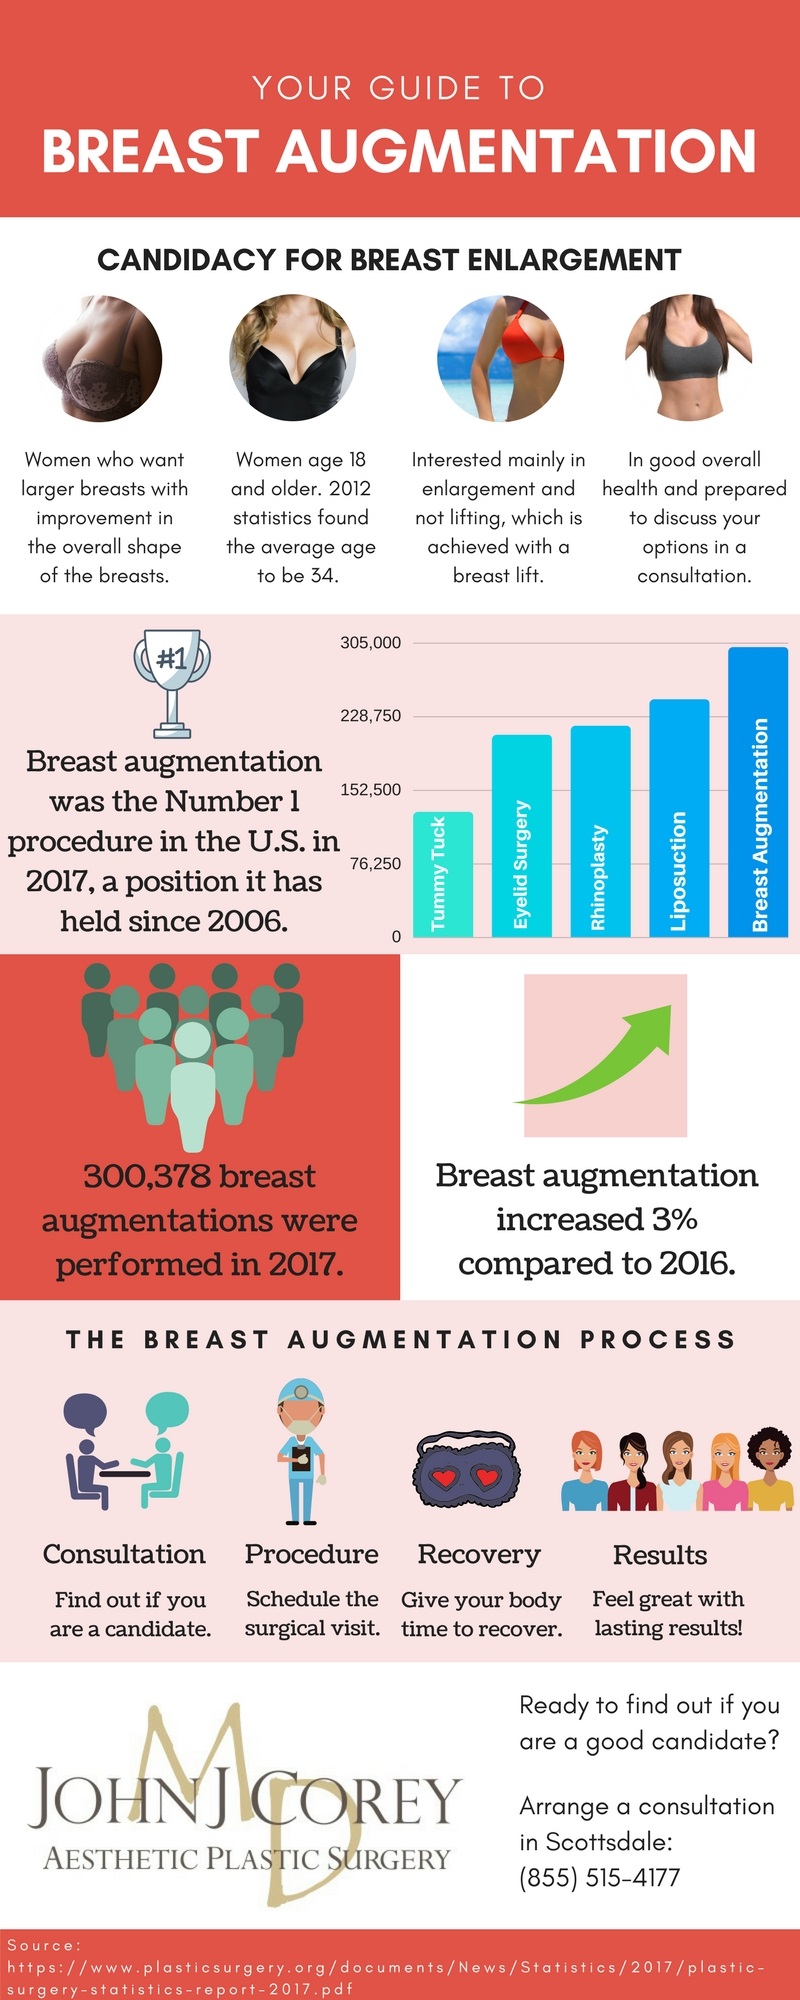 Breast augmentation statistics infographic